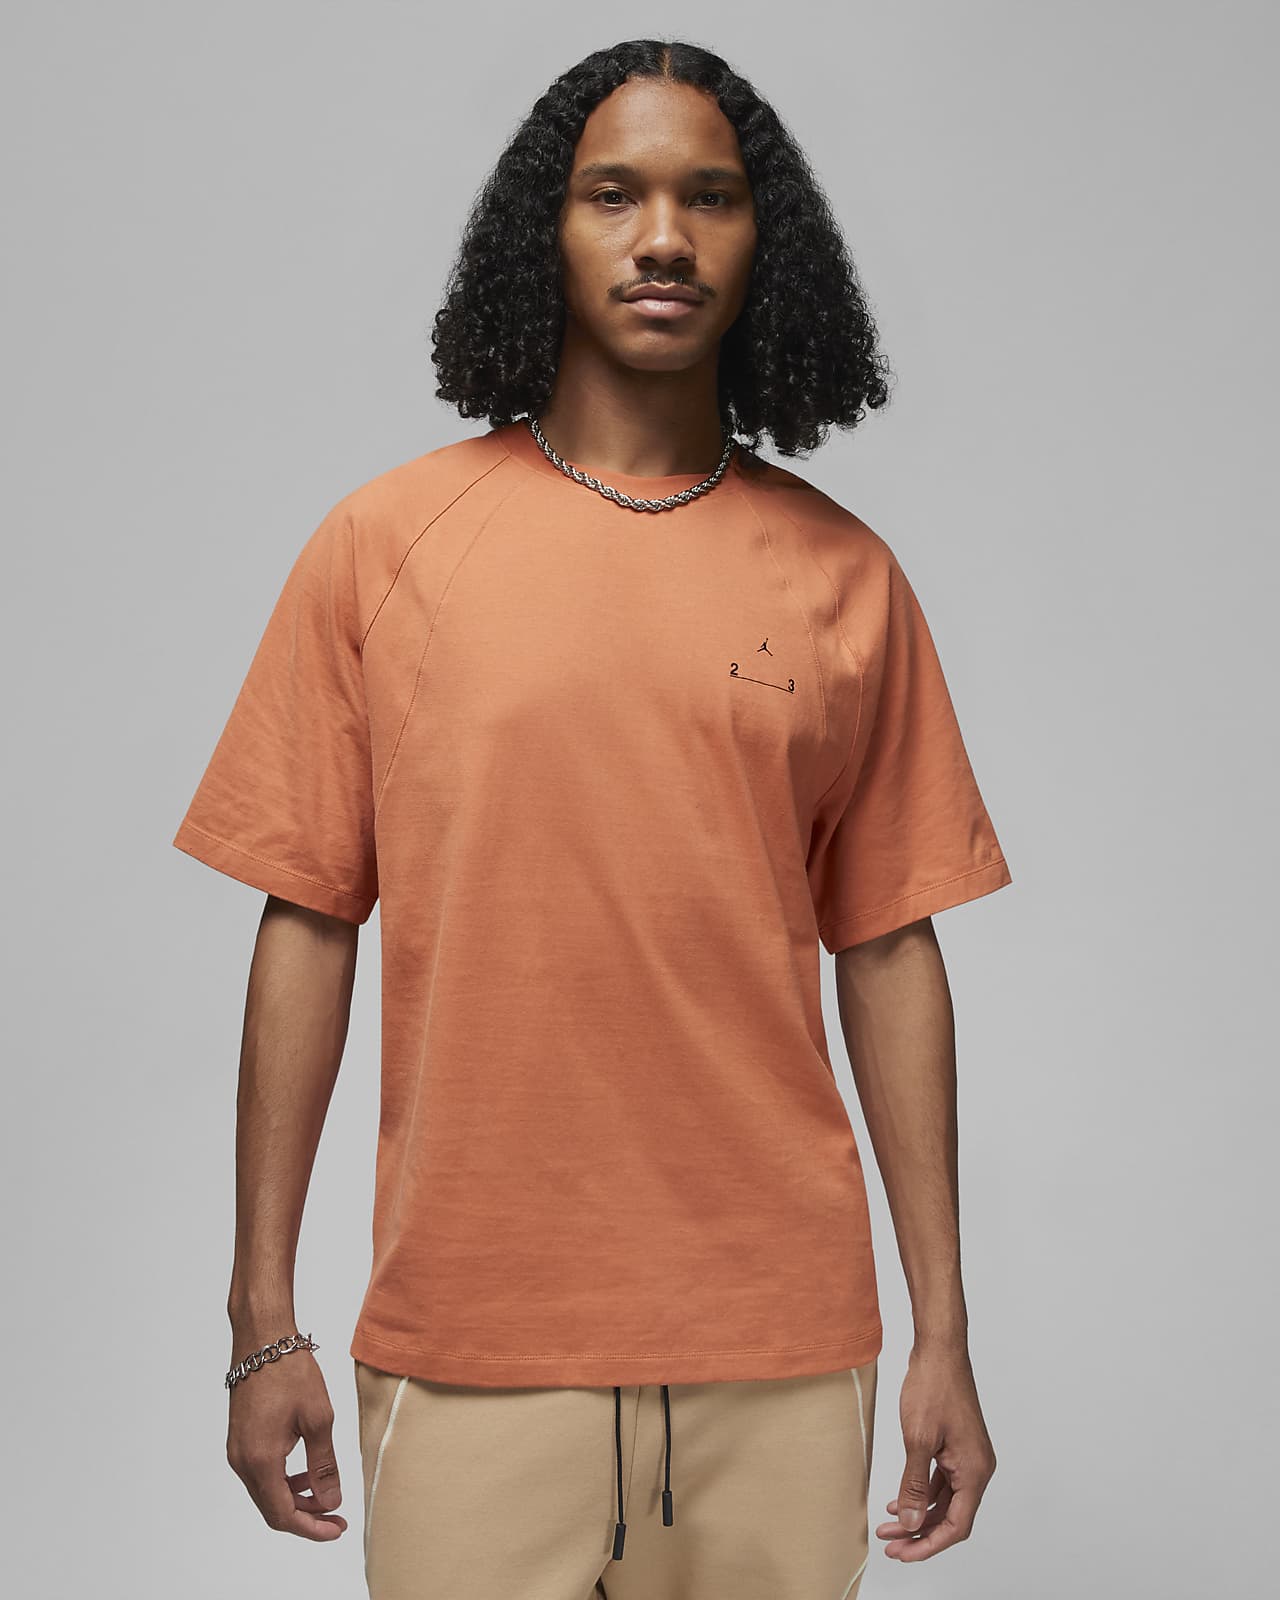 Jordan Men's 23 Engineered T-Shirt